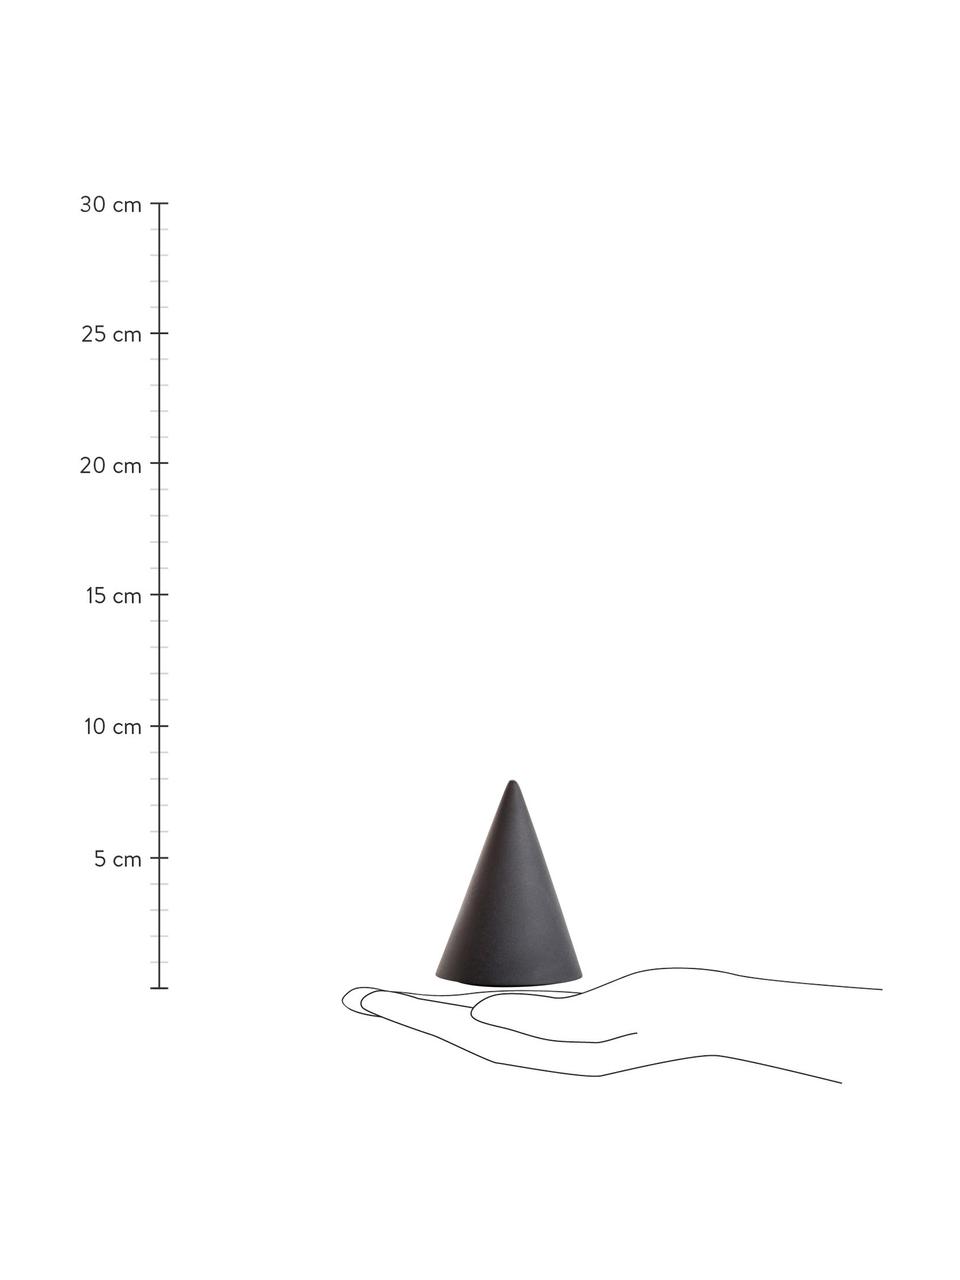 Design zout- en peperstrooier Cone, 2-delig, Porselein, siliconen, Wit, antraciet, Ø 6 x H 8 cm